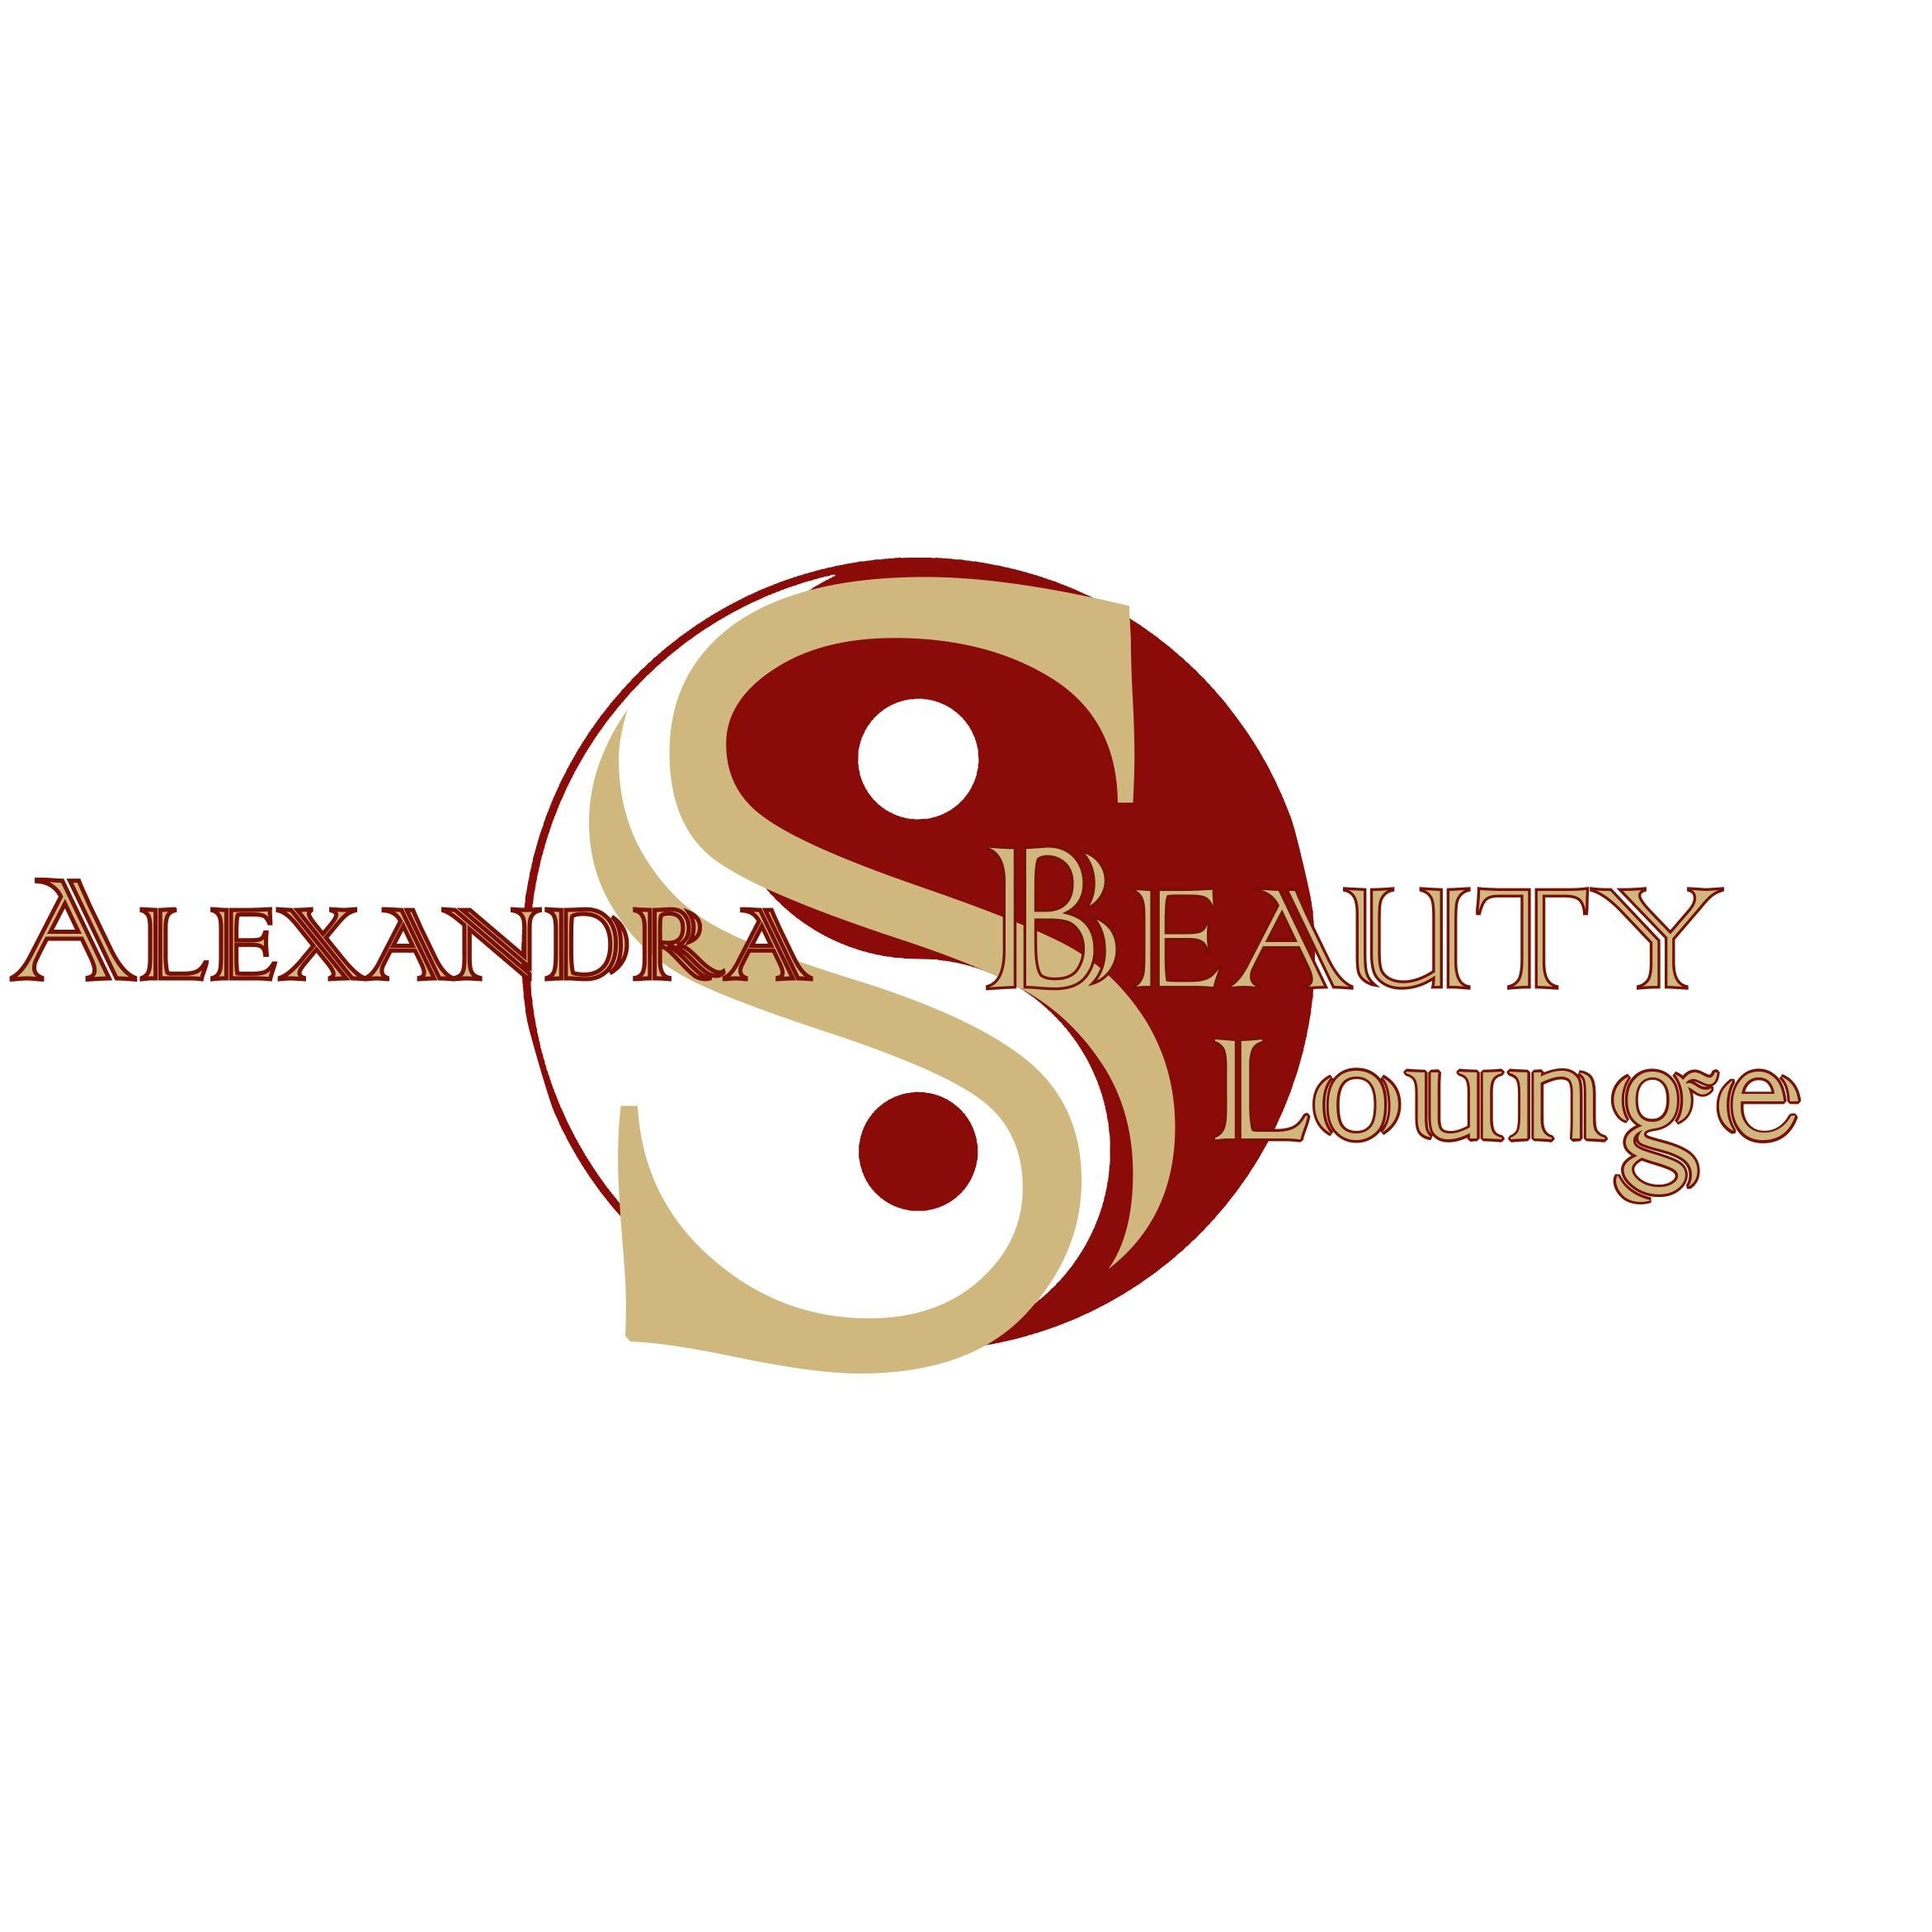 Alexandras Beauty Lounge Logo